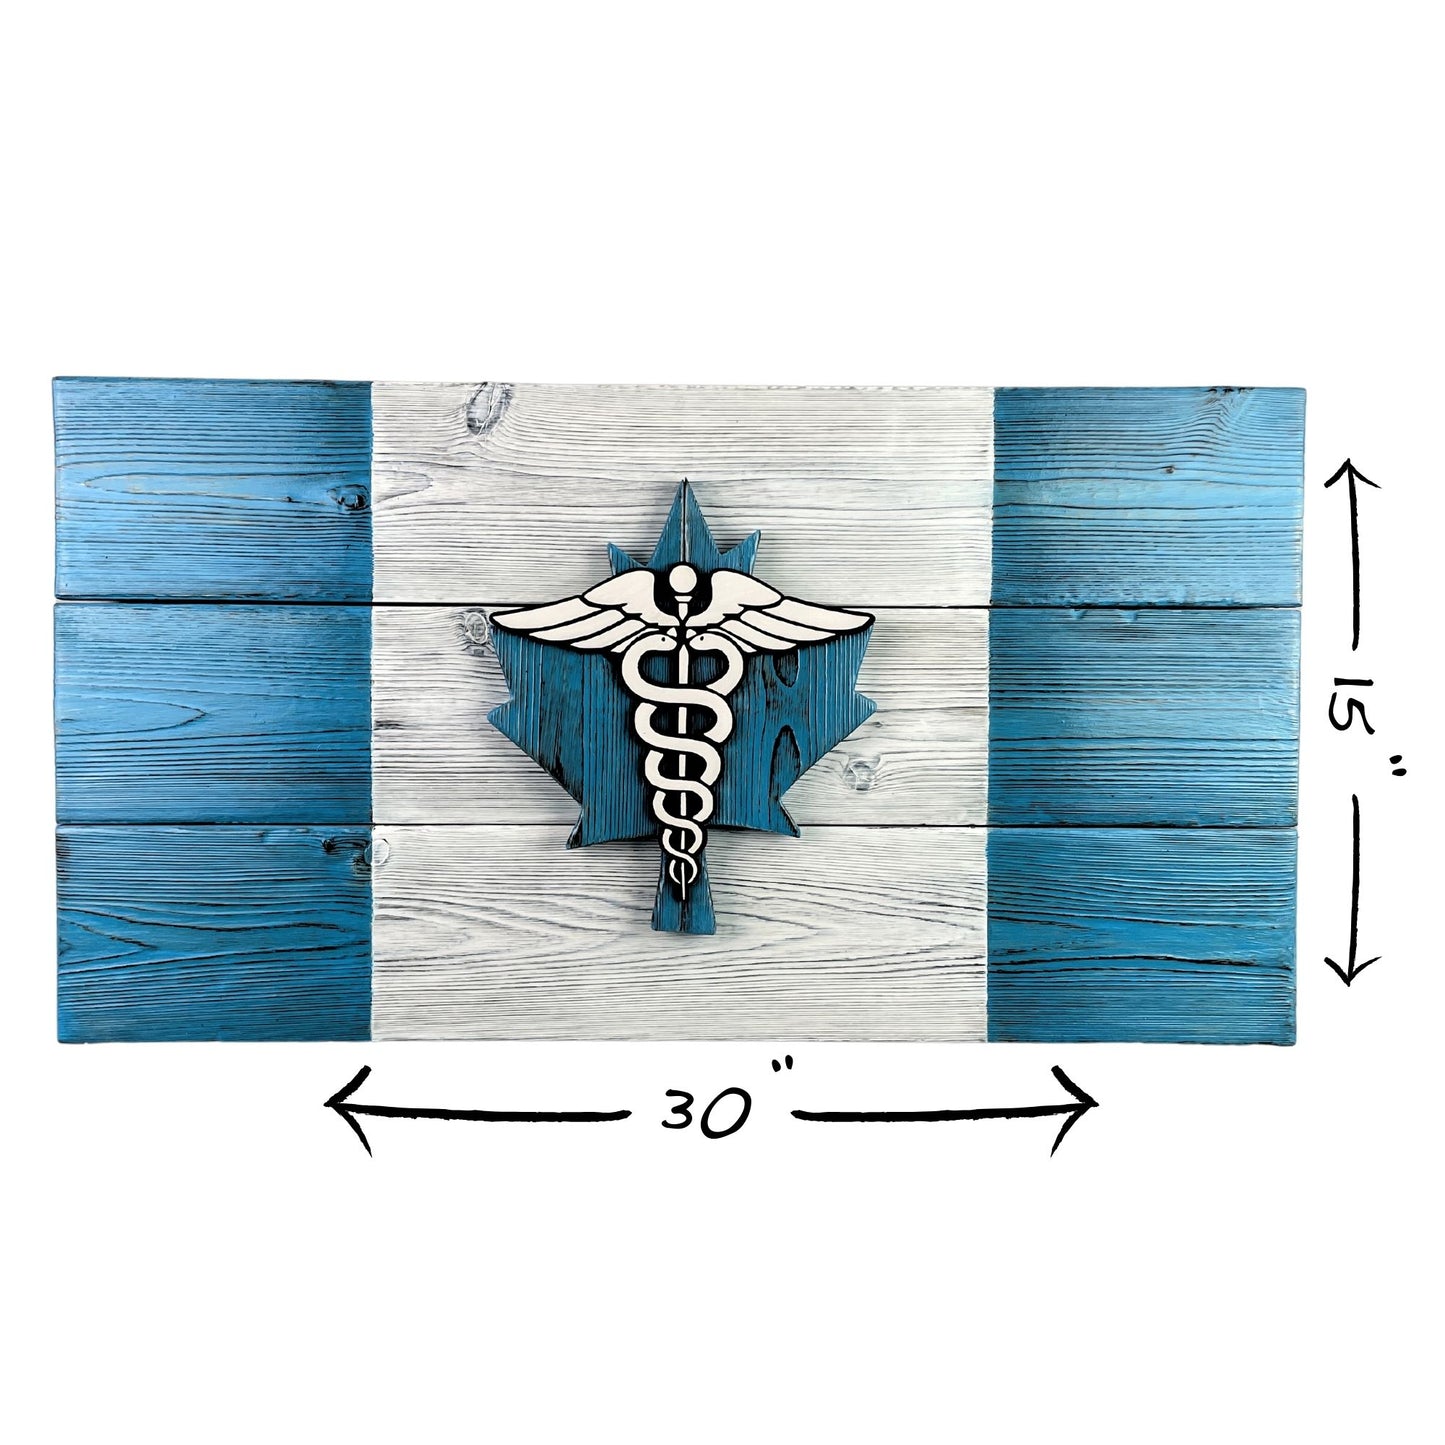 Canadian Nurse Wooden Flag with Caduceus in Blue - Gift Registered Nurse RN - Medical Healthcare Decor 